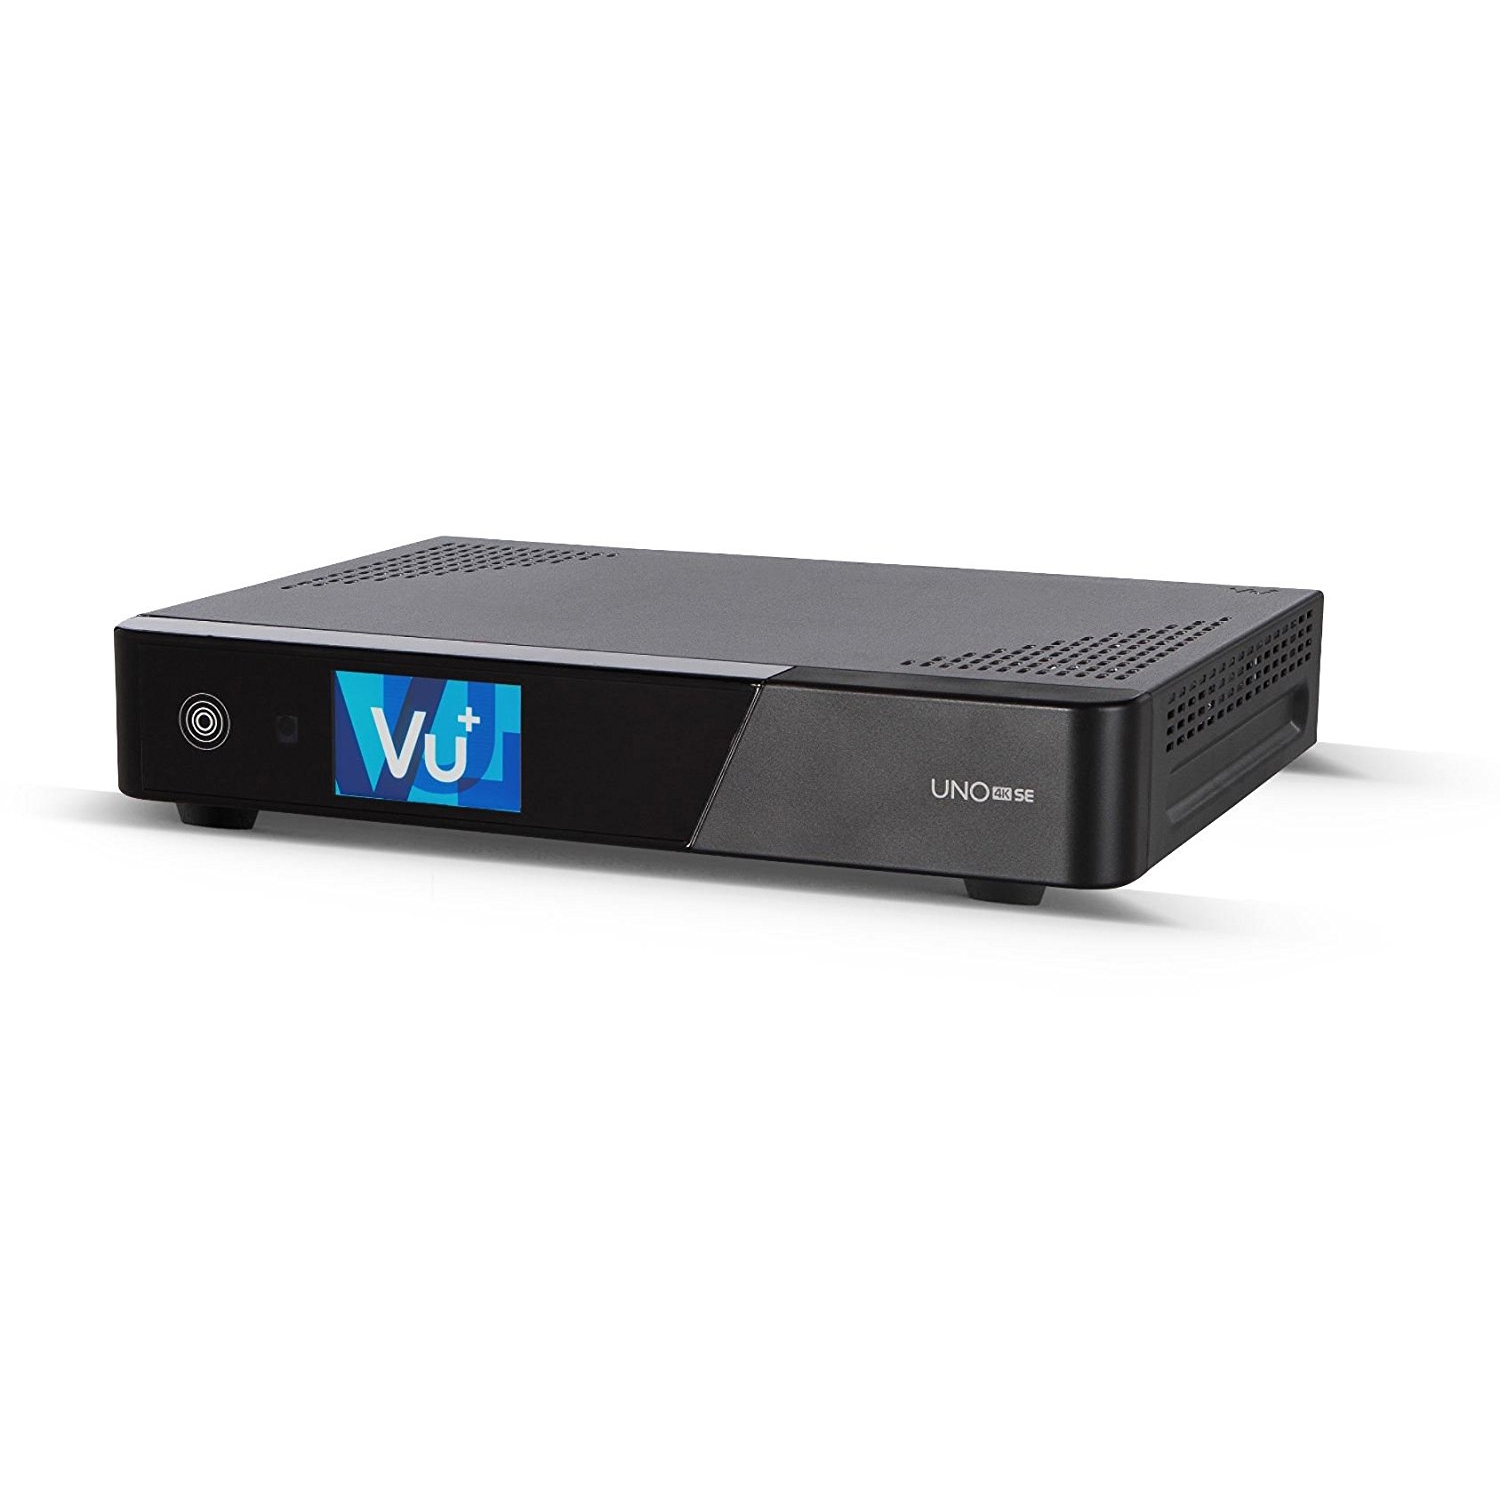 1TB Twin Sat FBC SE Tuner, Uno DVB-S2X (PVR-Funktion, Schwarz) DVB-S2, 4K Receiver VU+ 4K